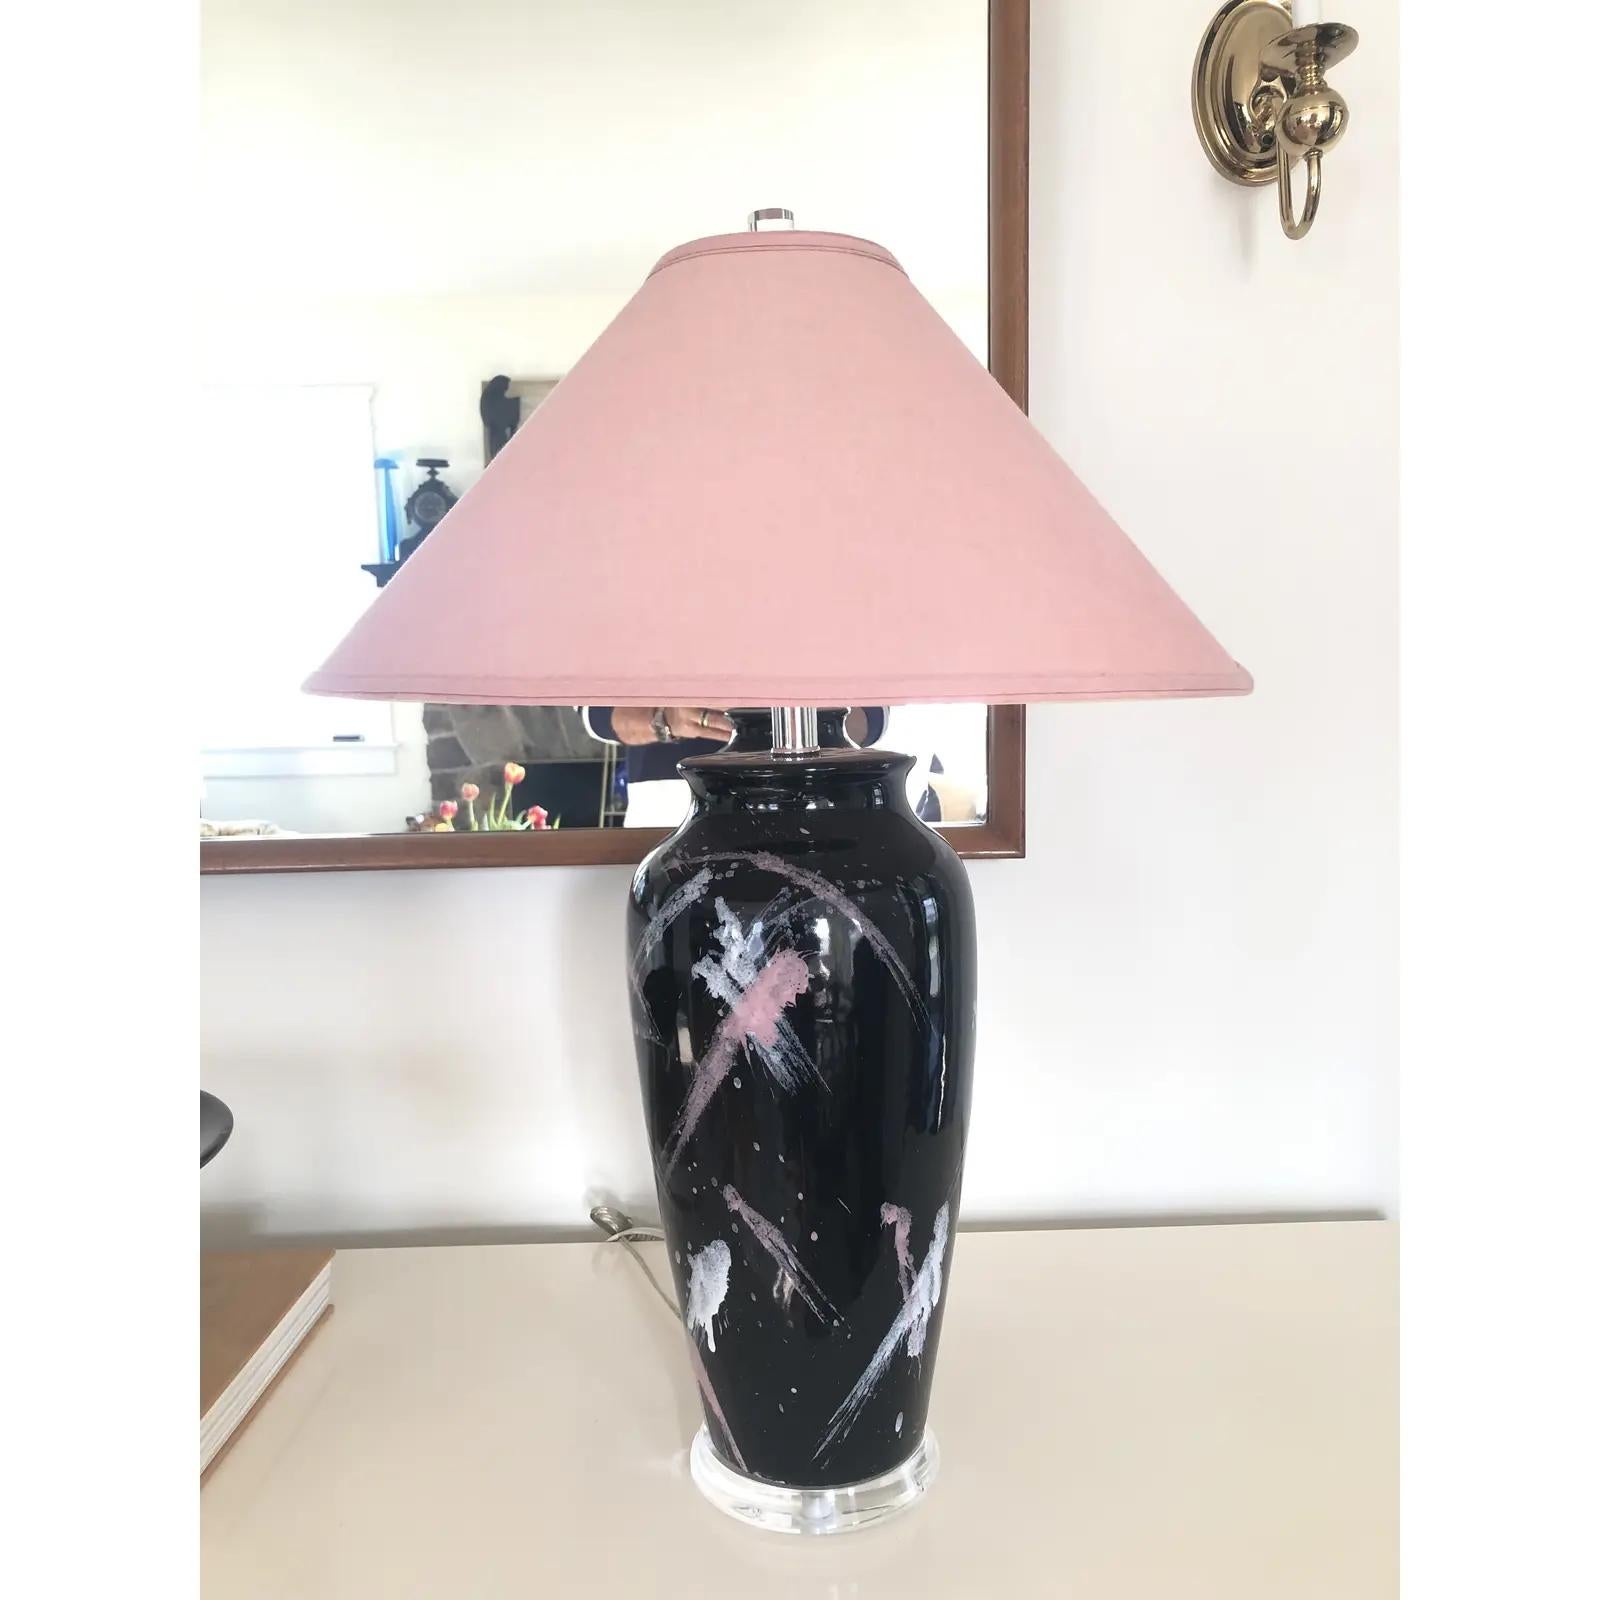 Vintage Postmodern Jackson Pollock Style Splatter Glaze Lamps - a Pair For Sale 1